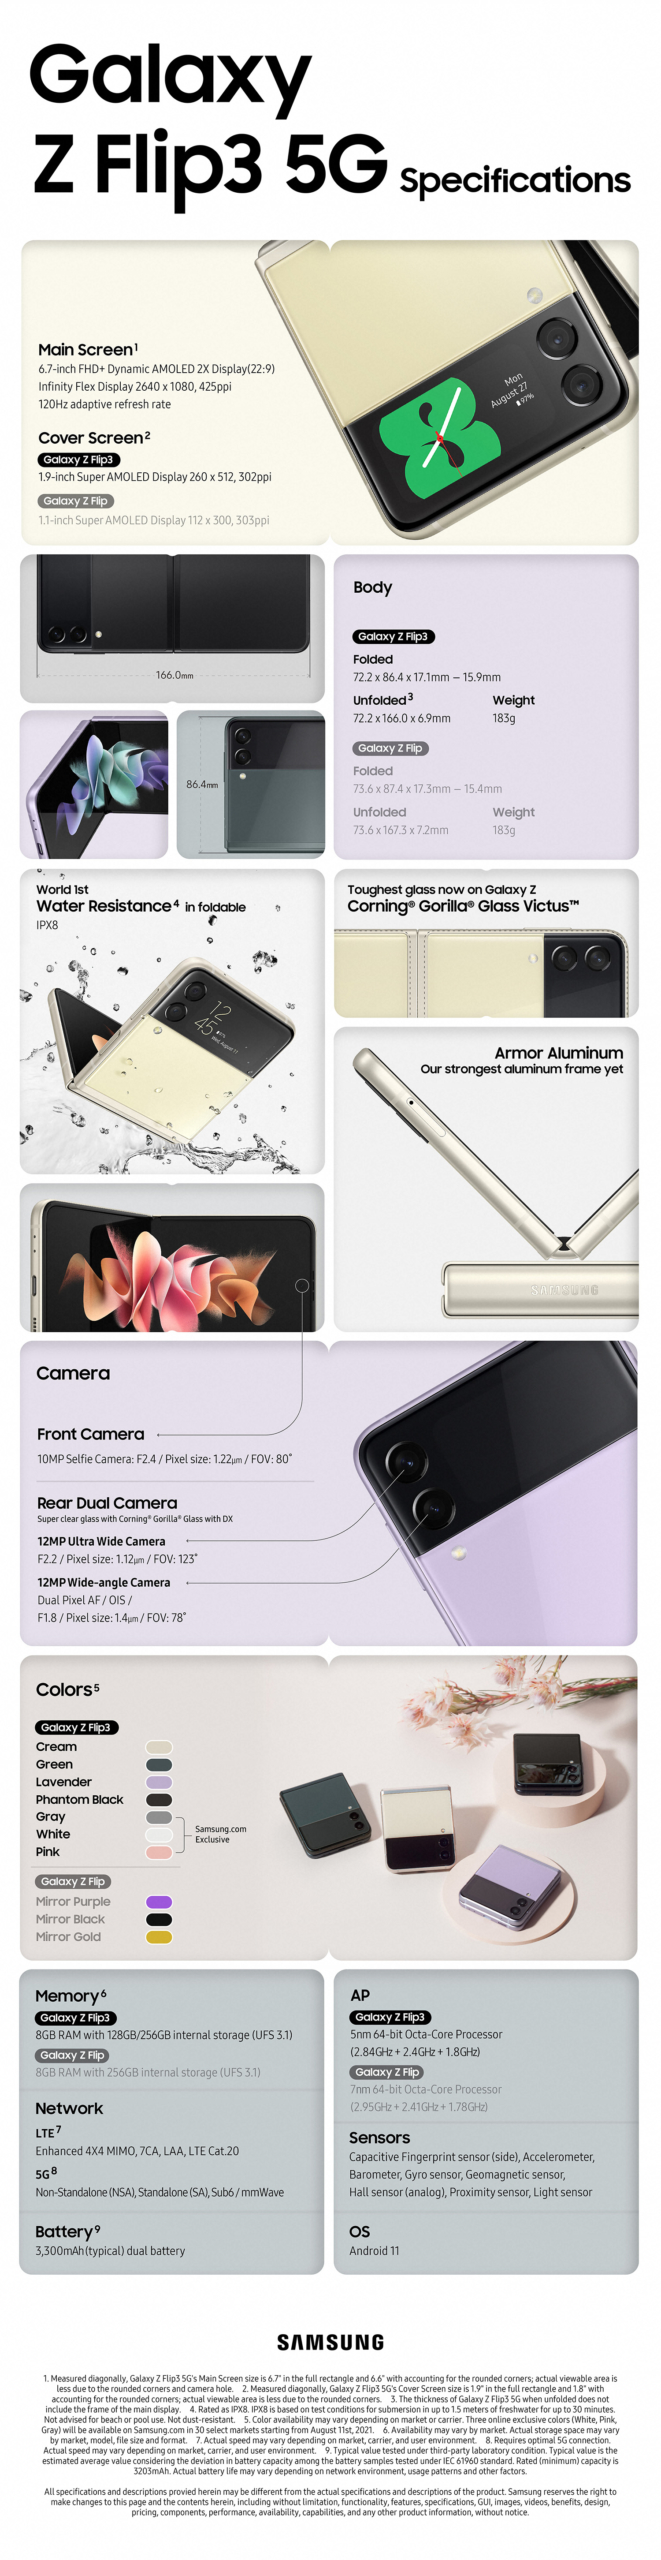 Galaxy Z Flip3 Full Product Specifications Specs